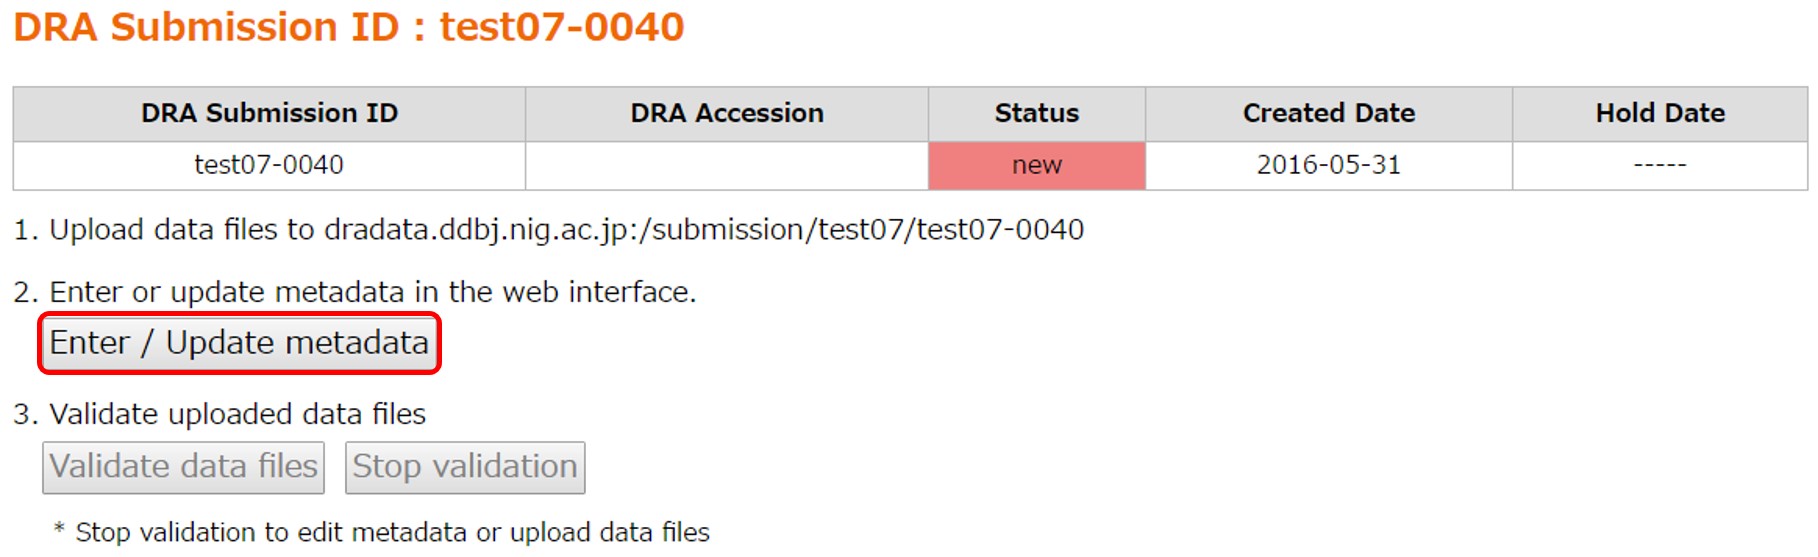 run the DRA metadata creation tool